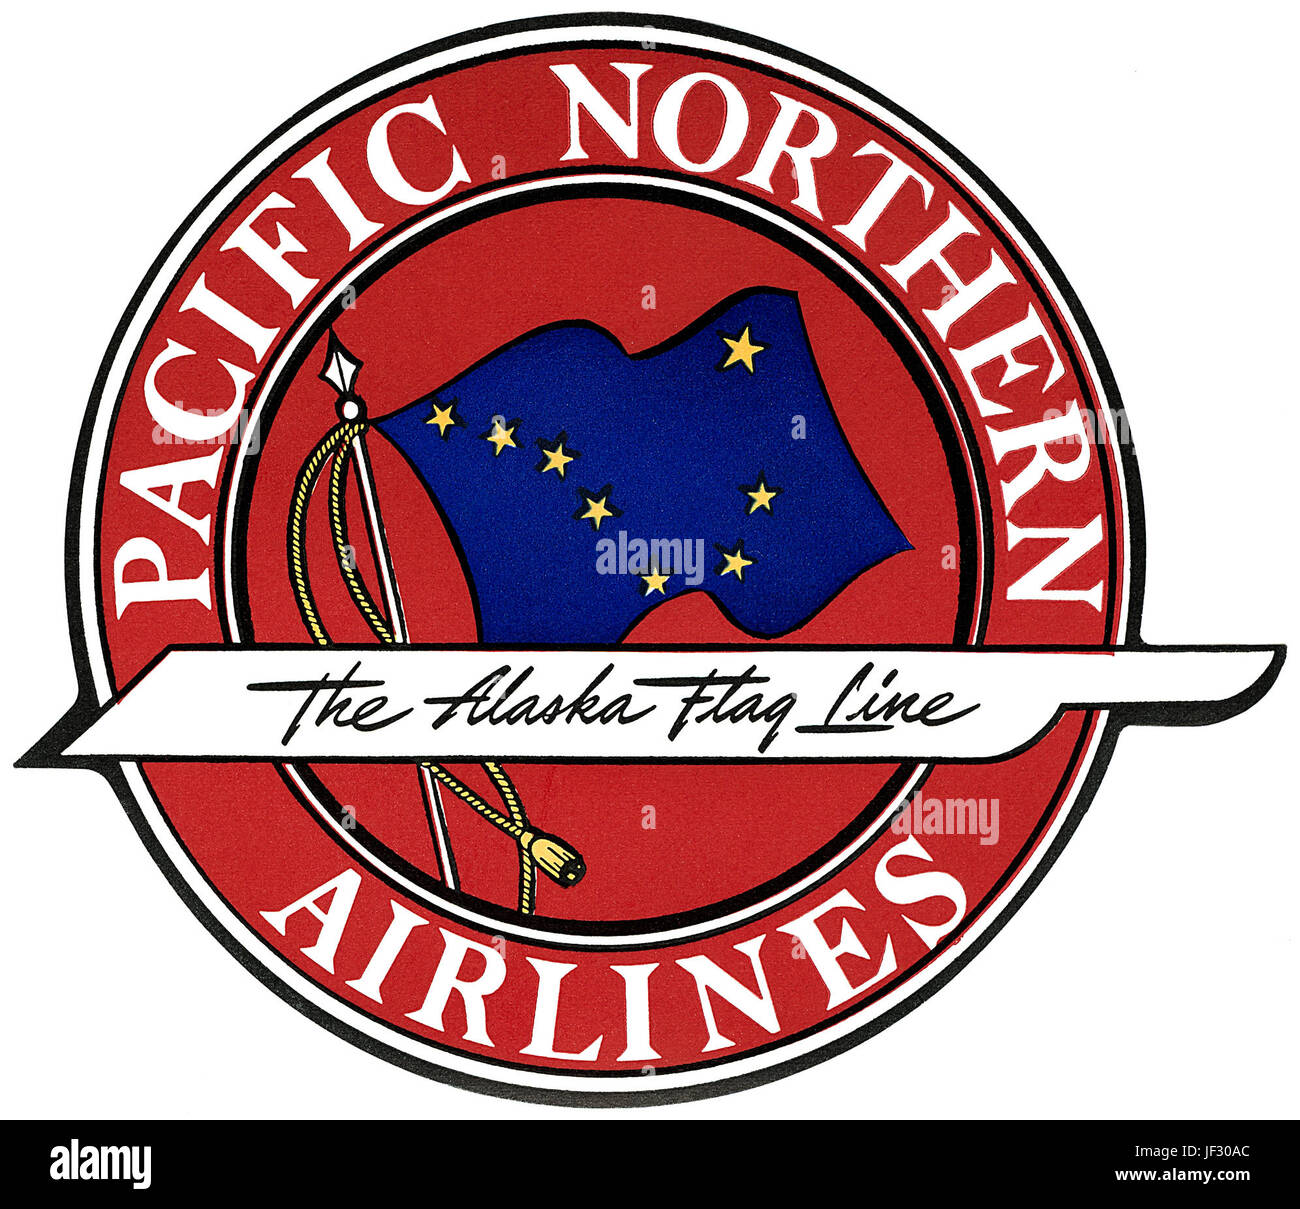 Vintage Northern Pacific Airlines Gepäck Label - "The Alaska Flagge Line." Stockfoto